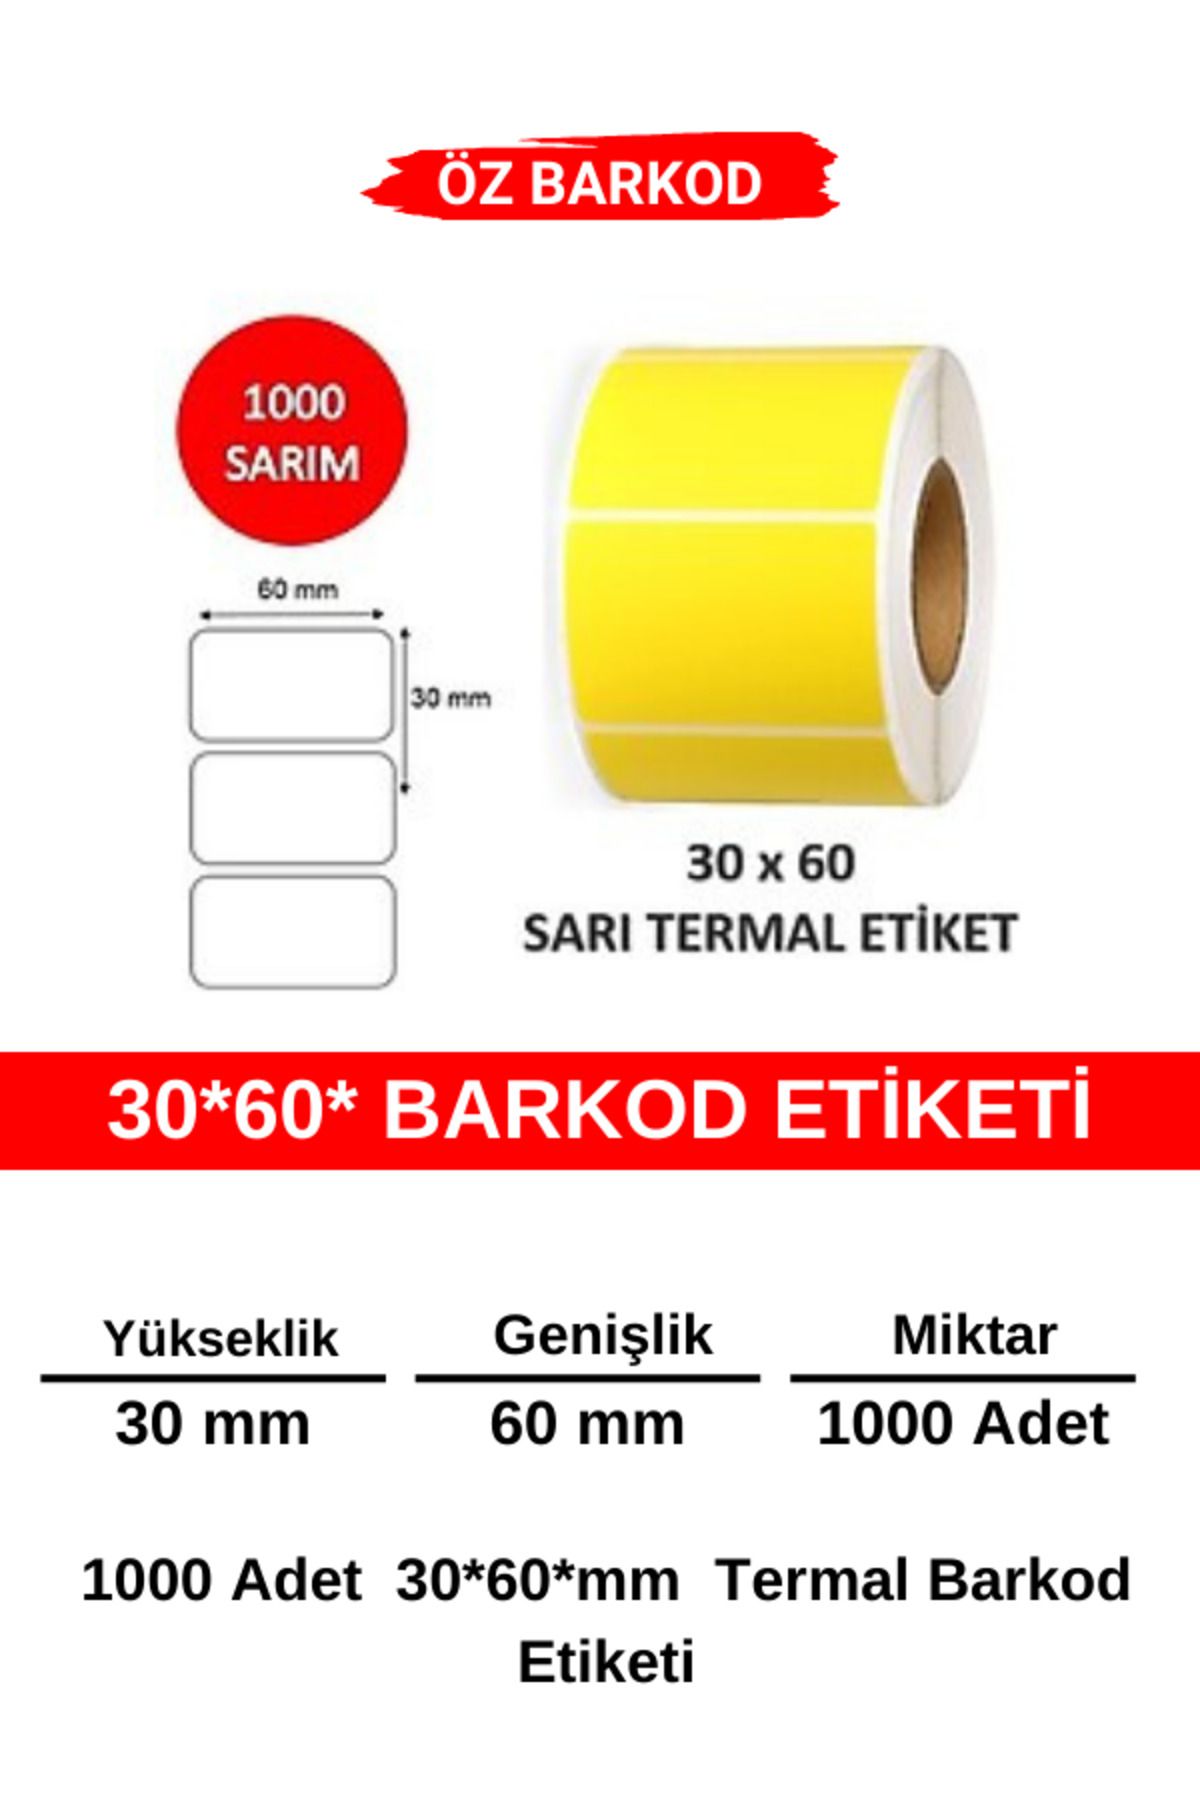 ÖZ BARKOD Barkod Etiketi 30x60 - 1000 Adet - Sarı etiket